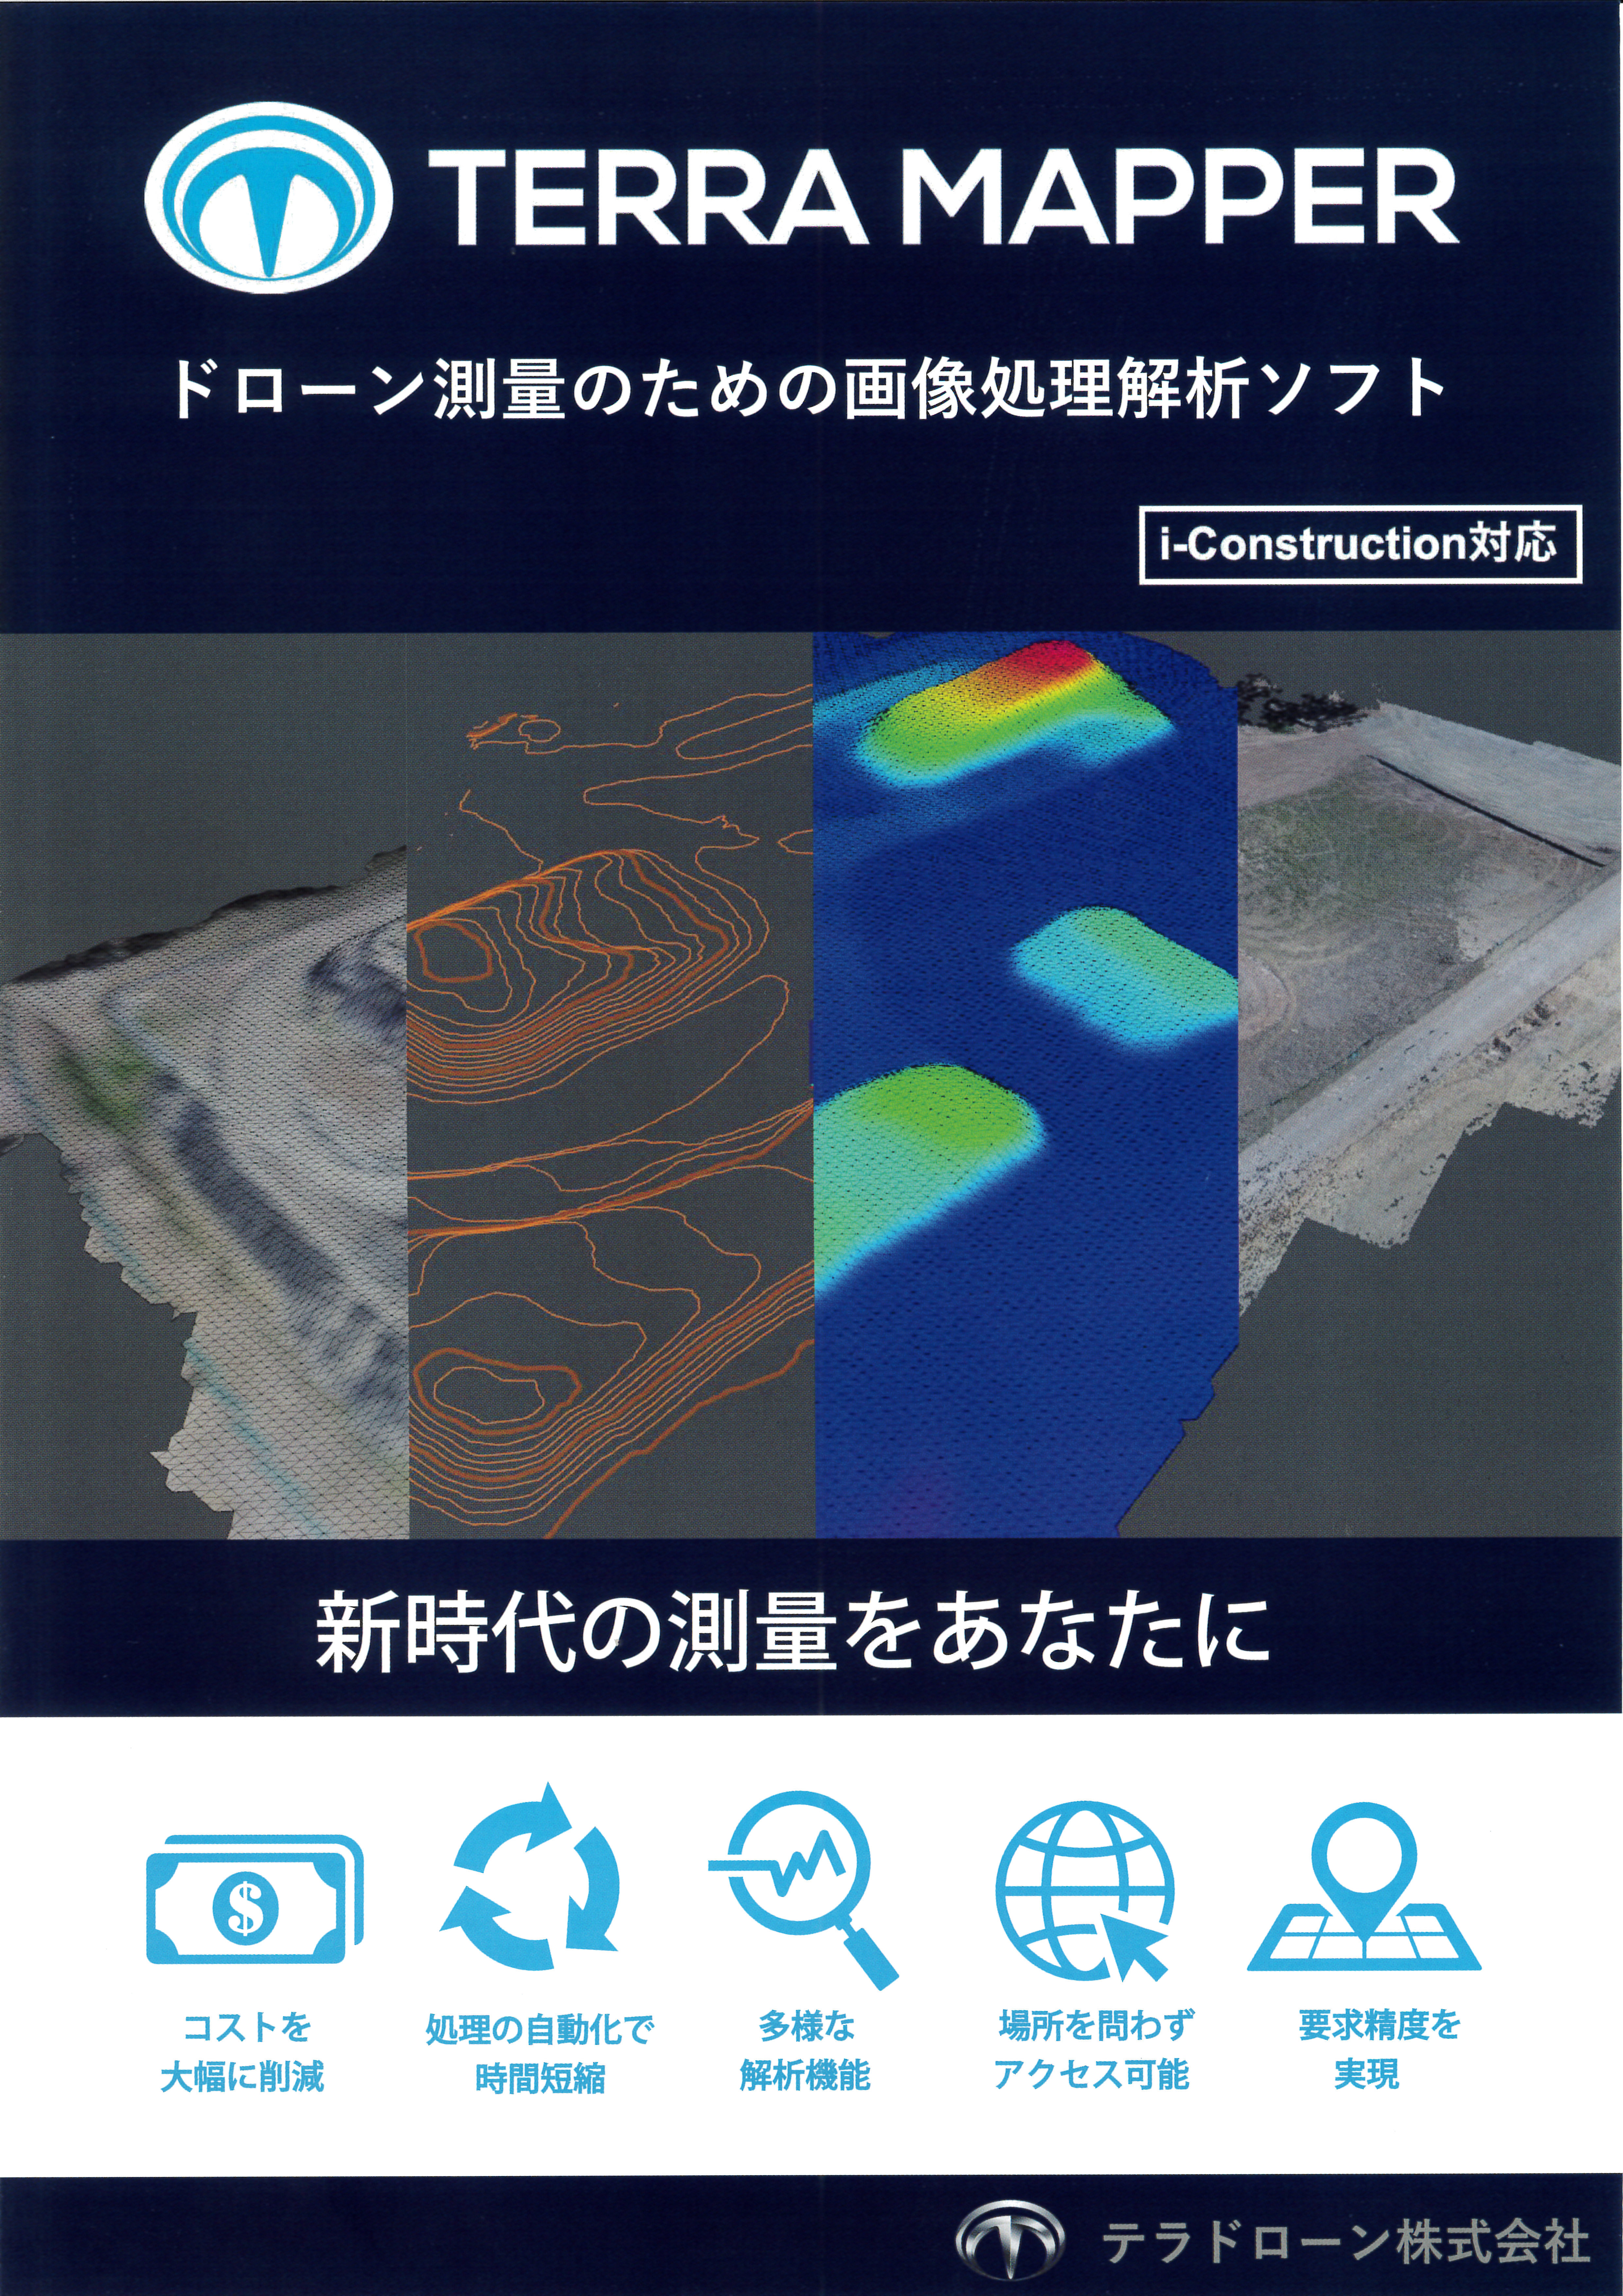 【D-ACADEMY関東埼玉】 スクール無料説明会 ・Terra Mapper導入無料説明会